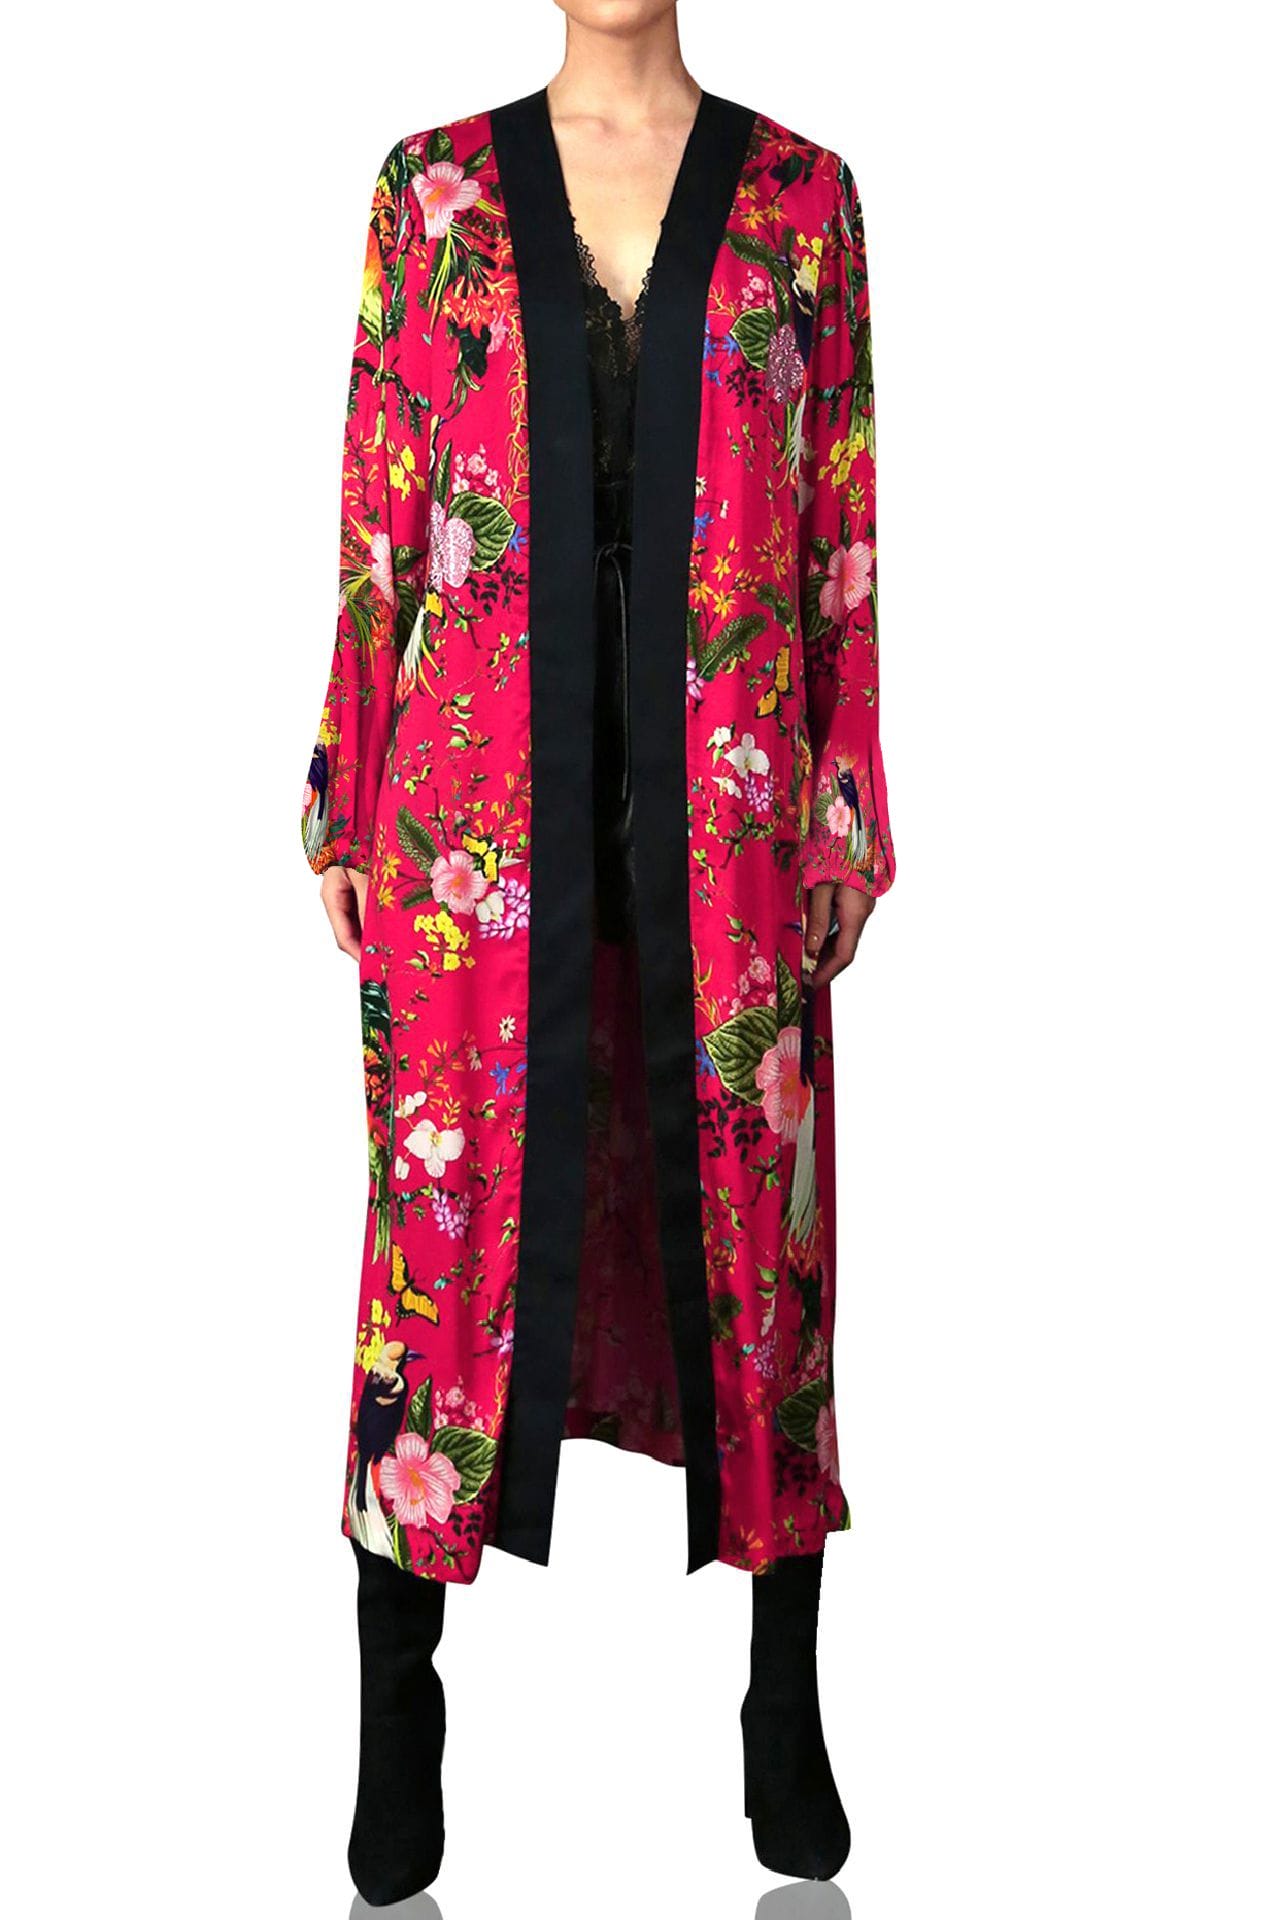 "Kyle X Shahida" "long silk kimono" "womens long kimono"  "kimono silk robe women's" "long kimono robe womens" 